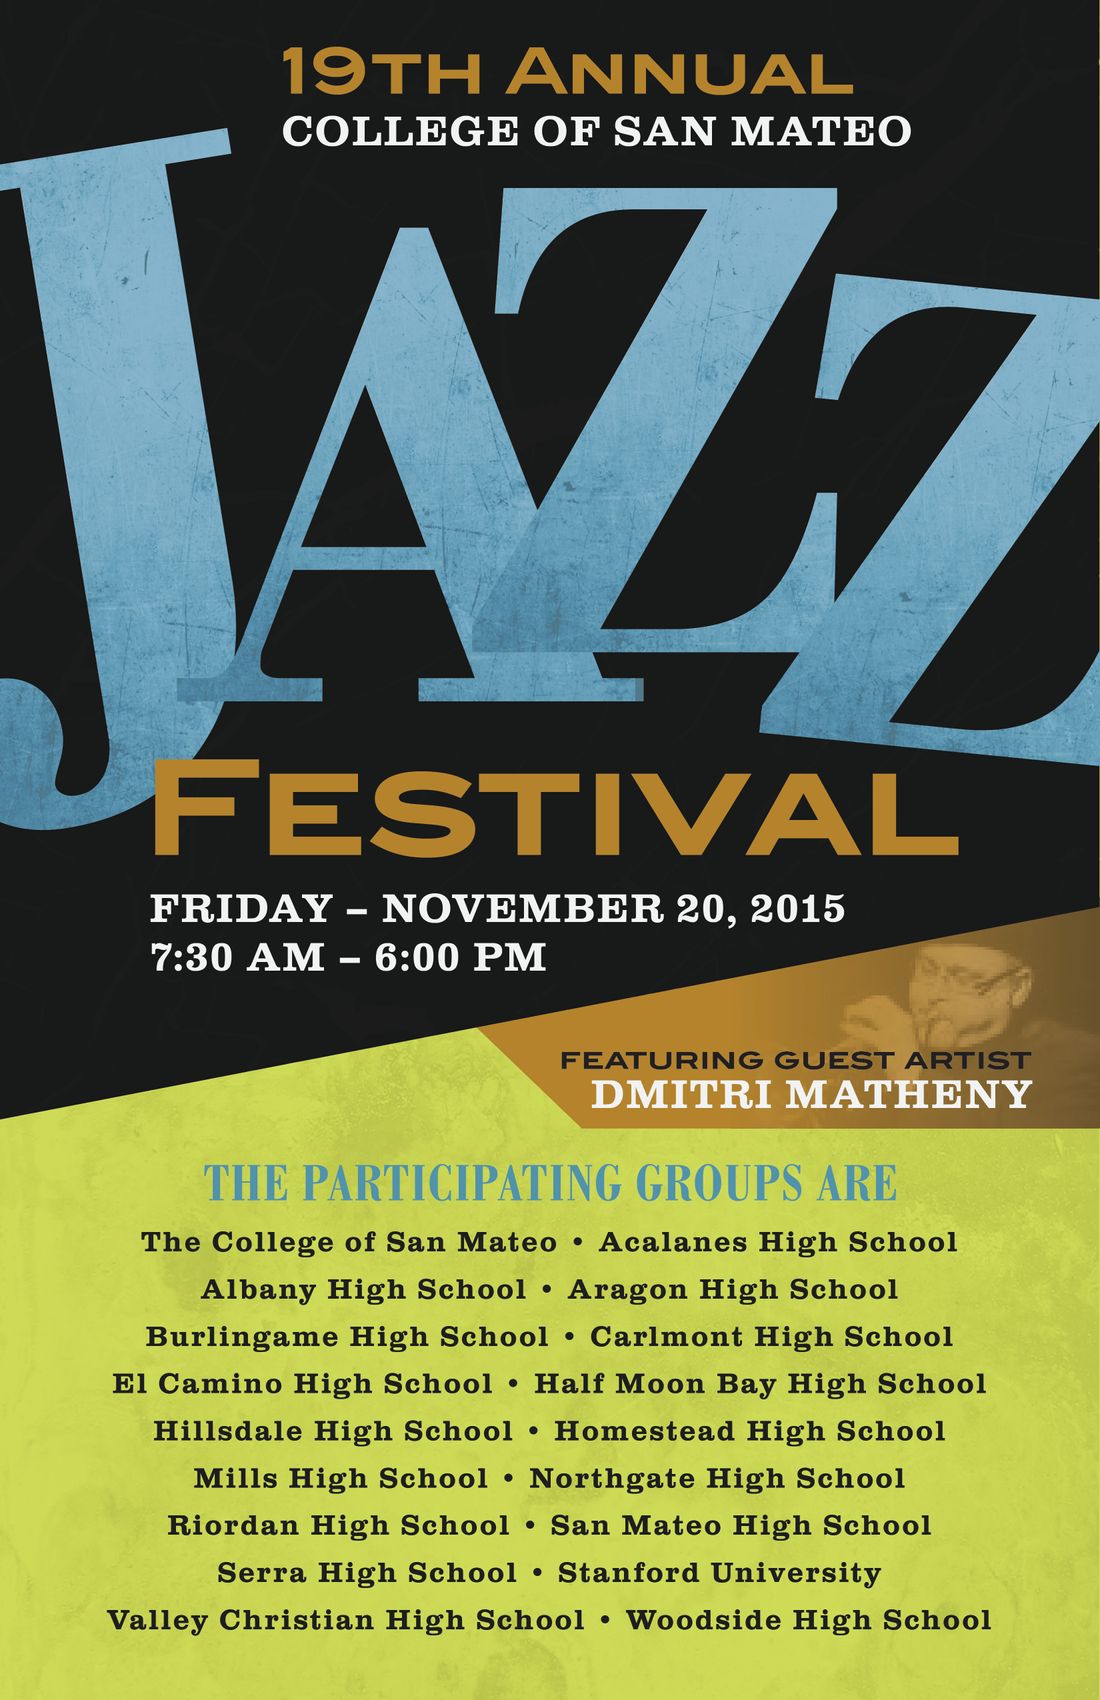 College of San Mateo Jazz Festival | San Mateo CA 11/20/15
